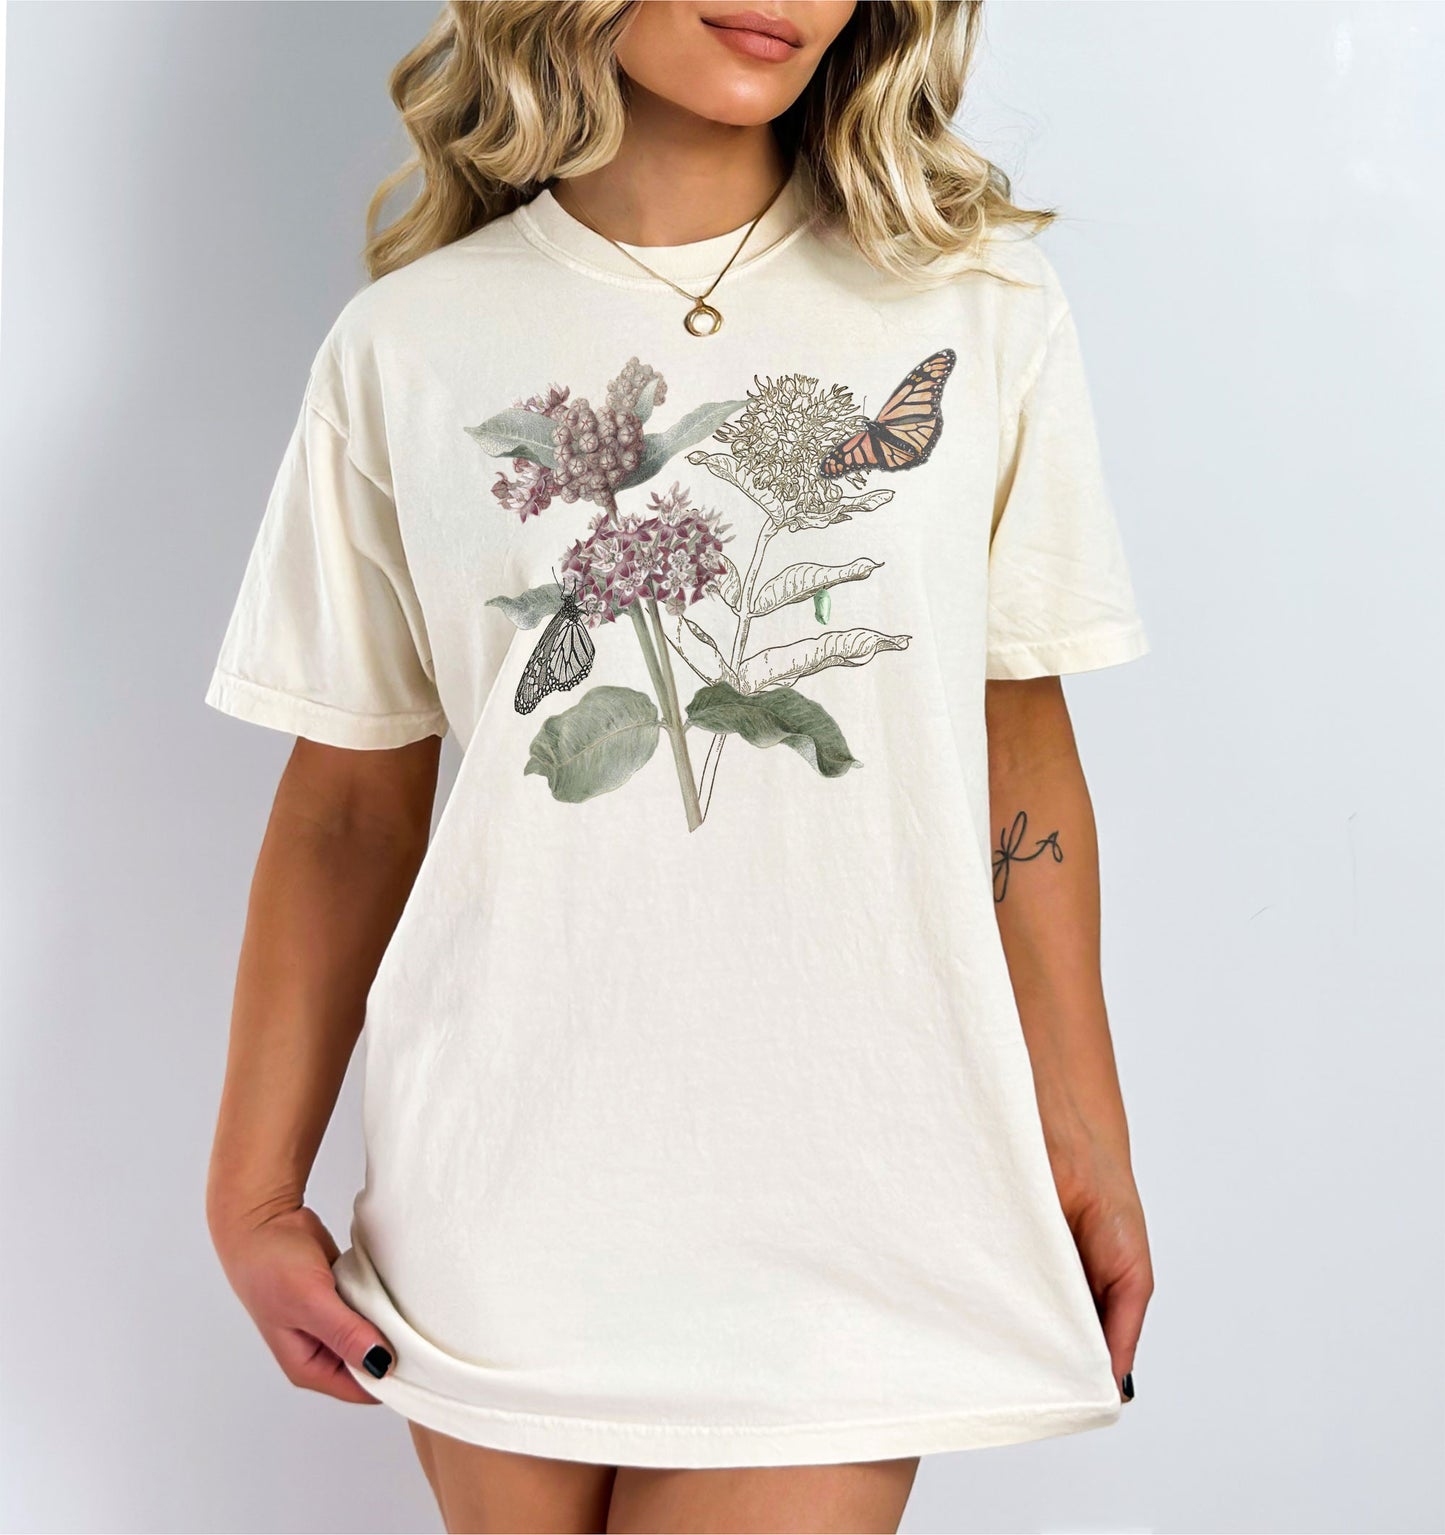 Save the Monarchs Milkweed shirt, Monarch butterfly chrysalis botanical tee gardening gift conservationist naturalist biologist t-shirt